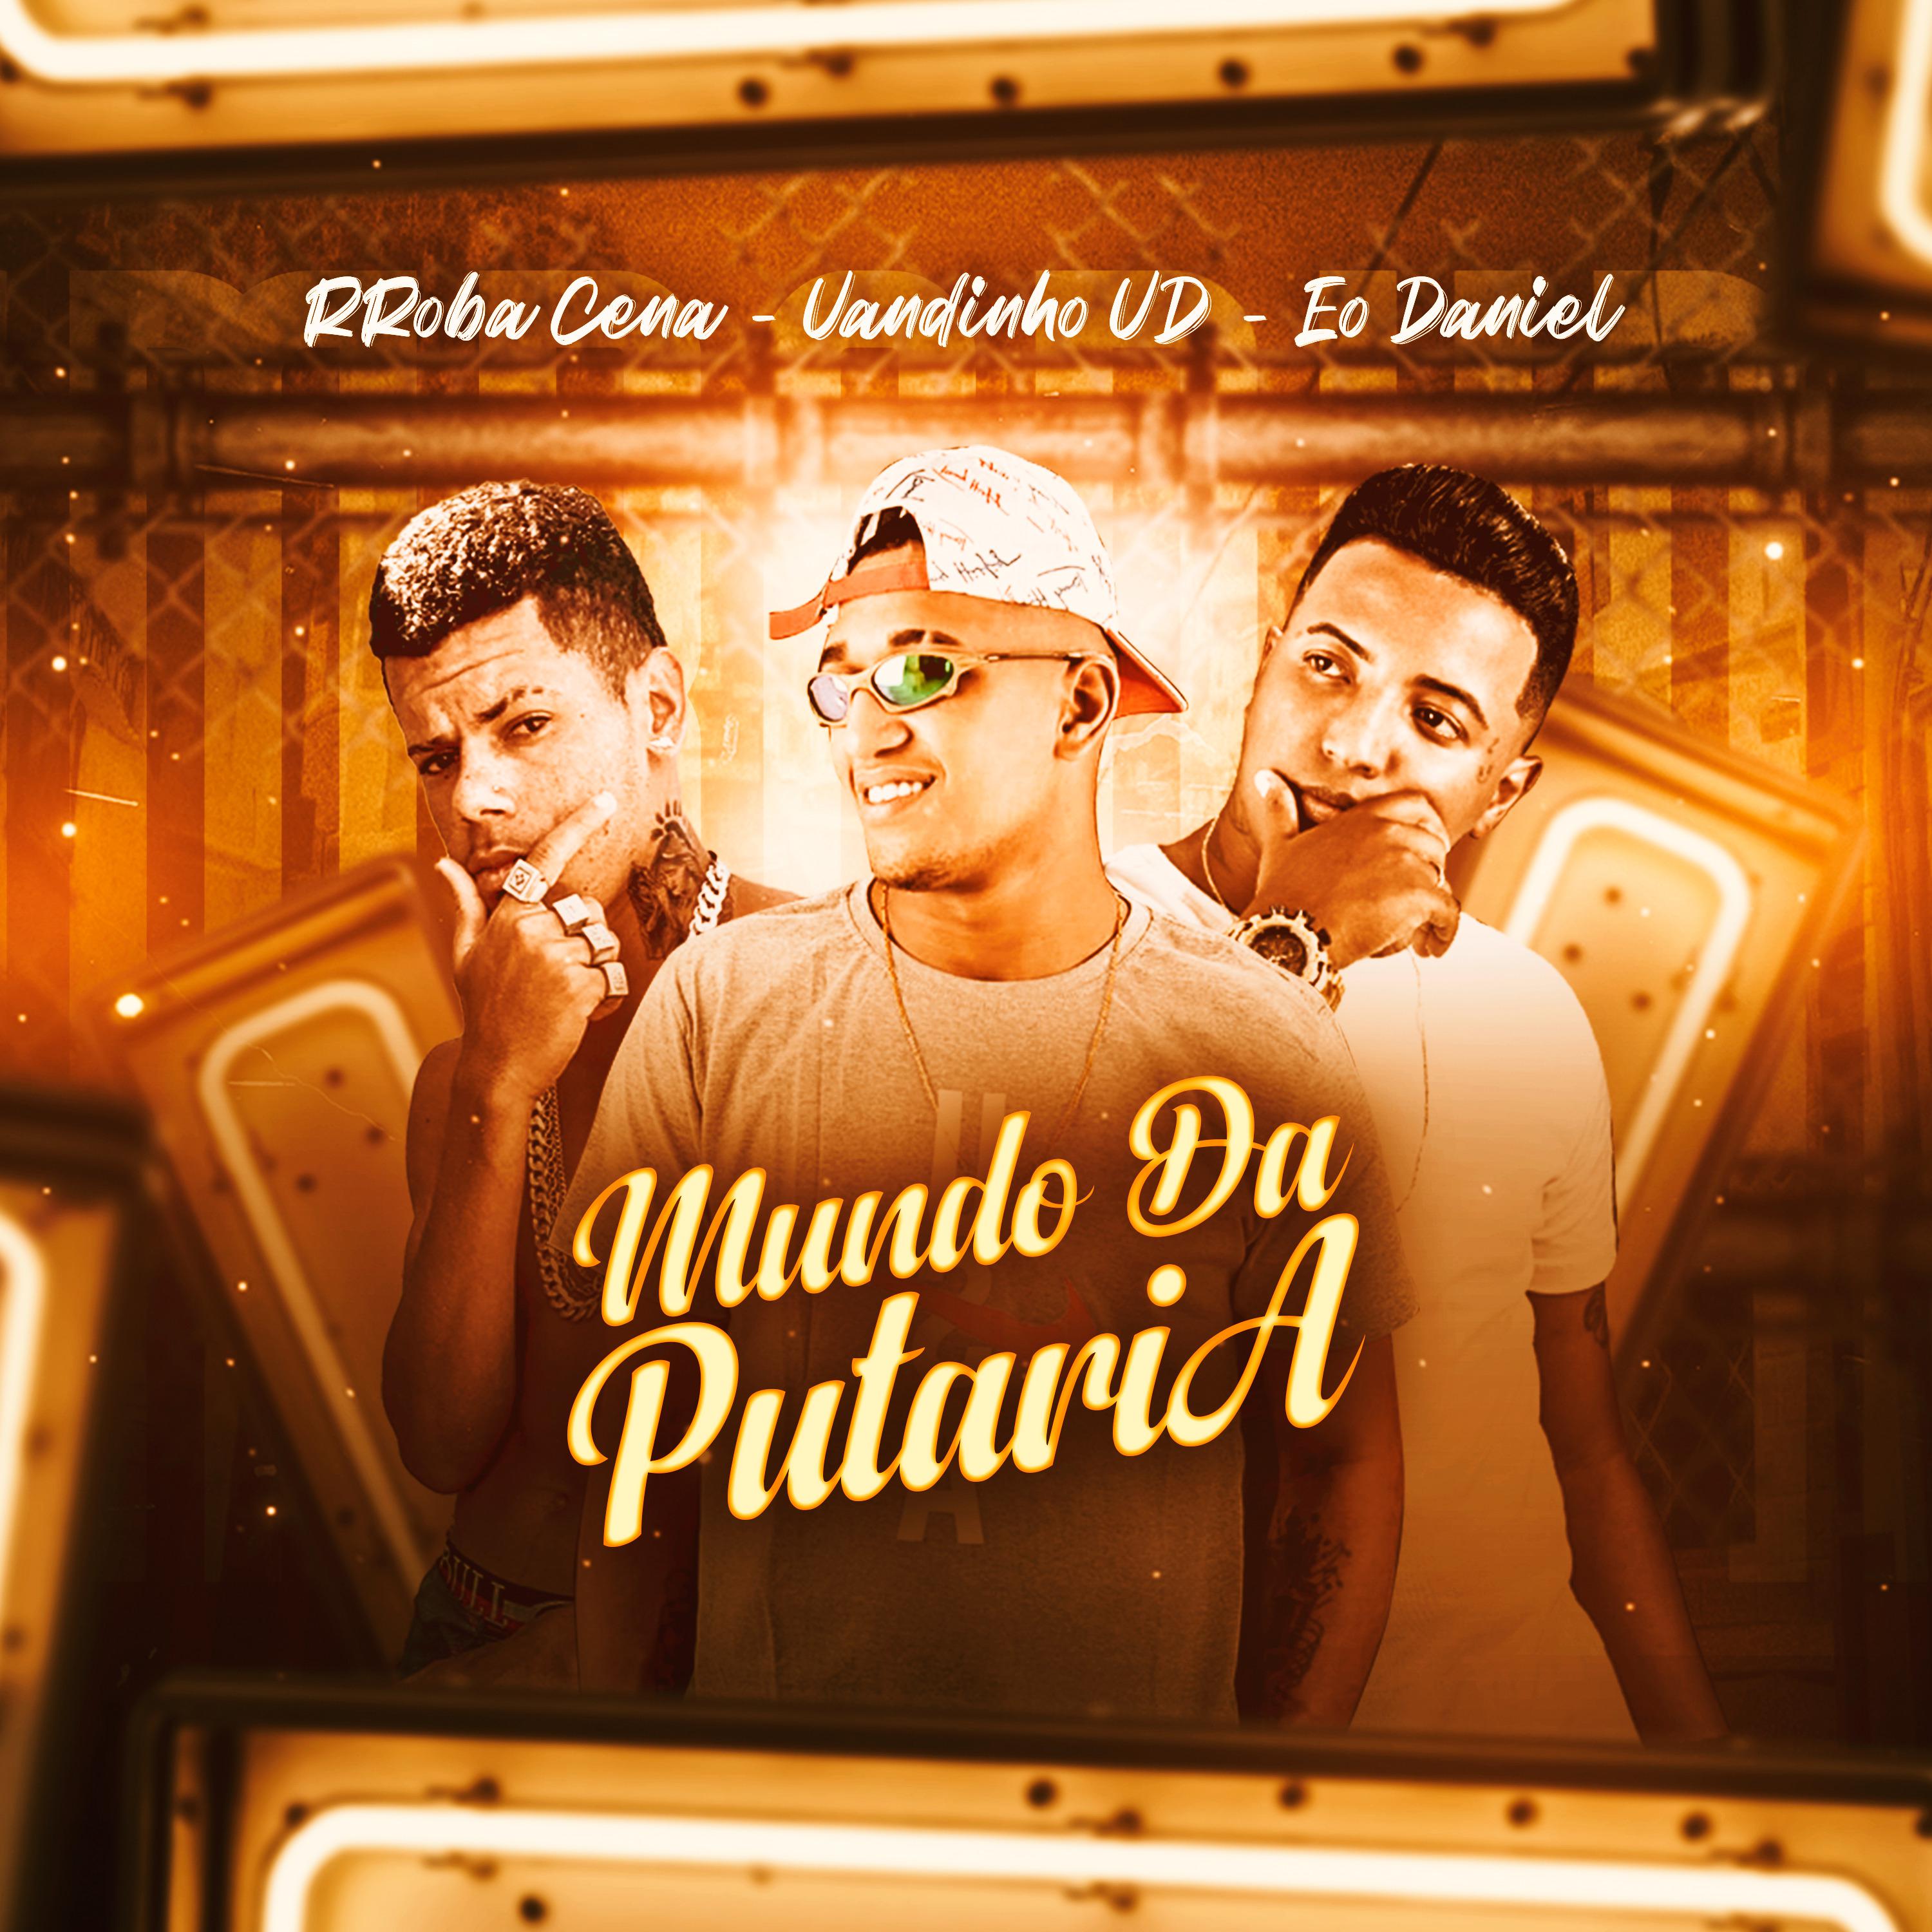 Постер альбома Mundo da Putaria